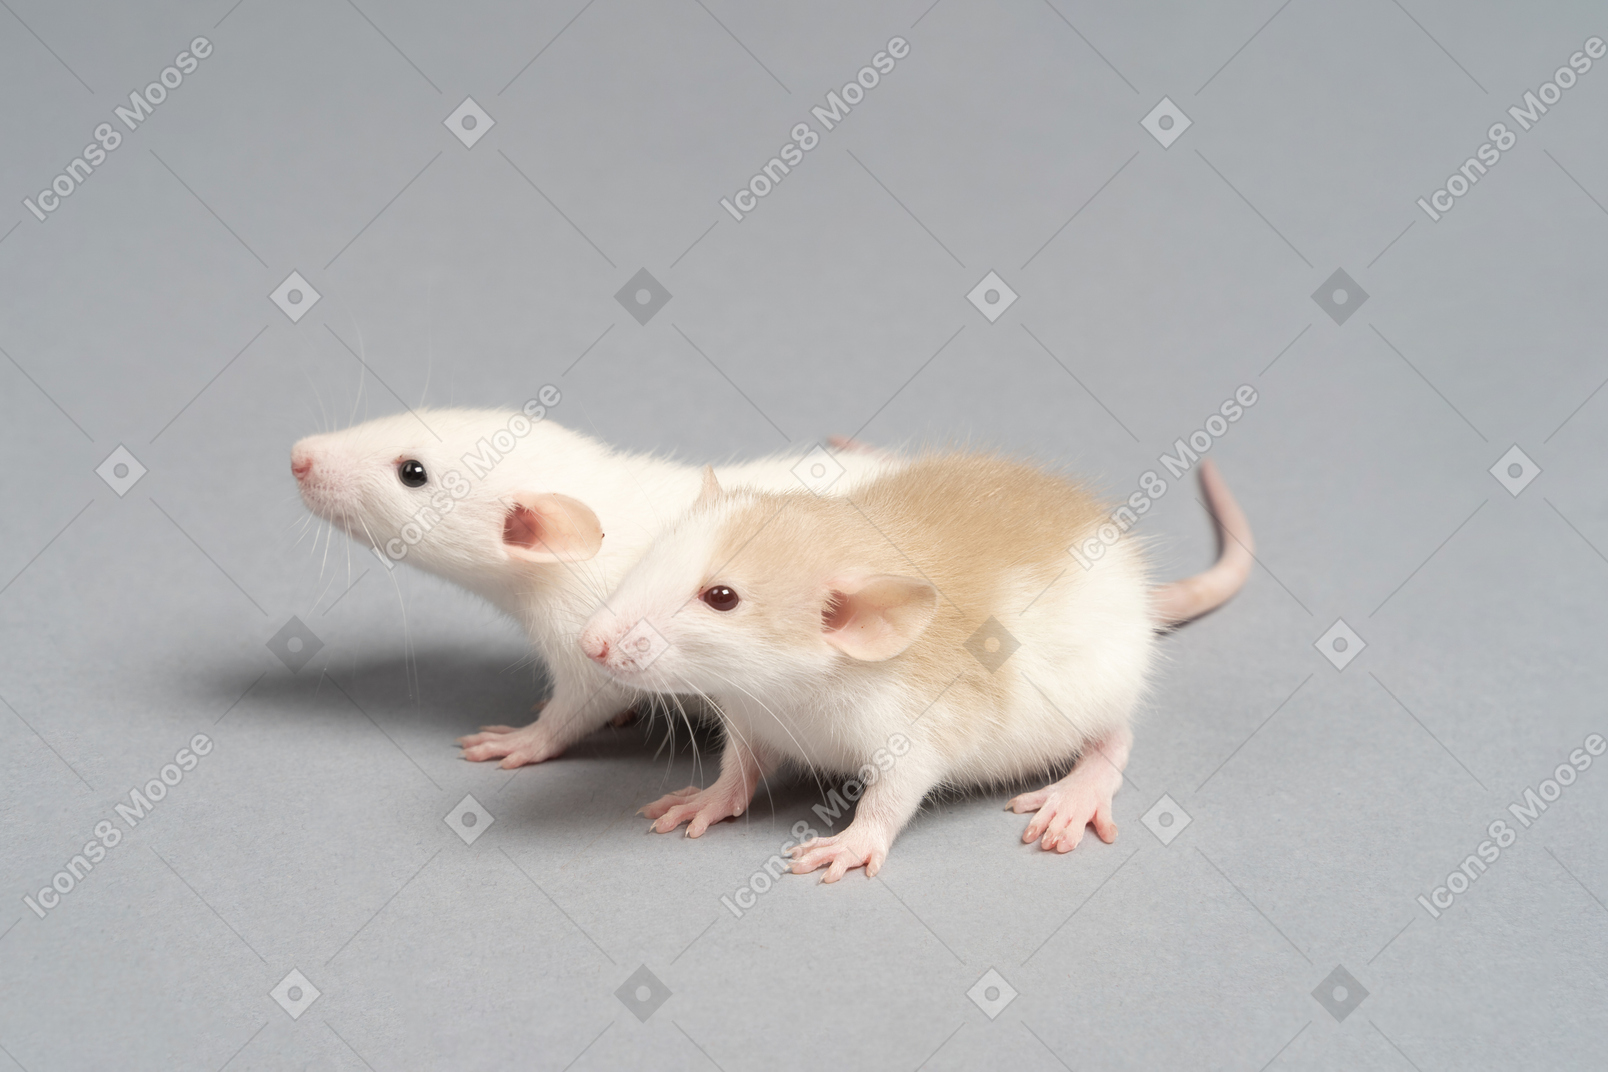 Dos lindos ratones mullidos